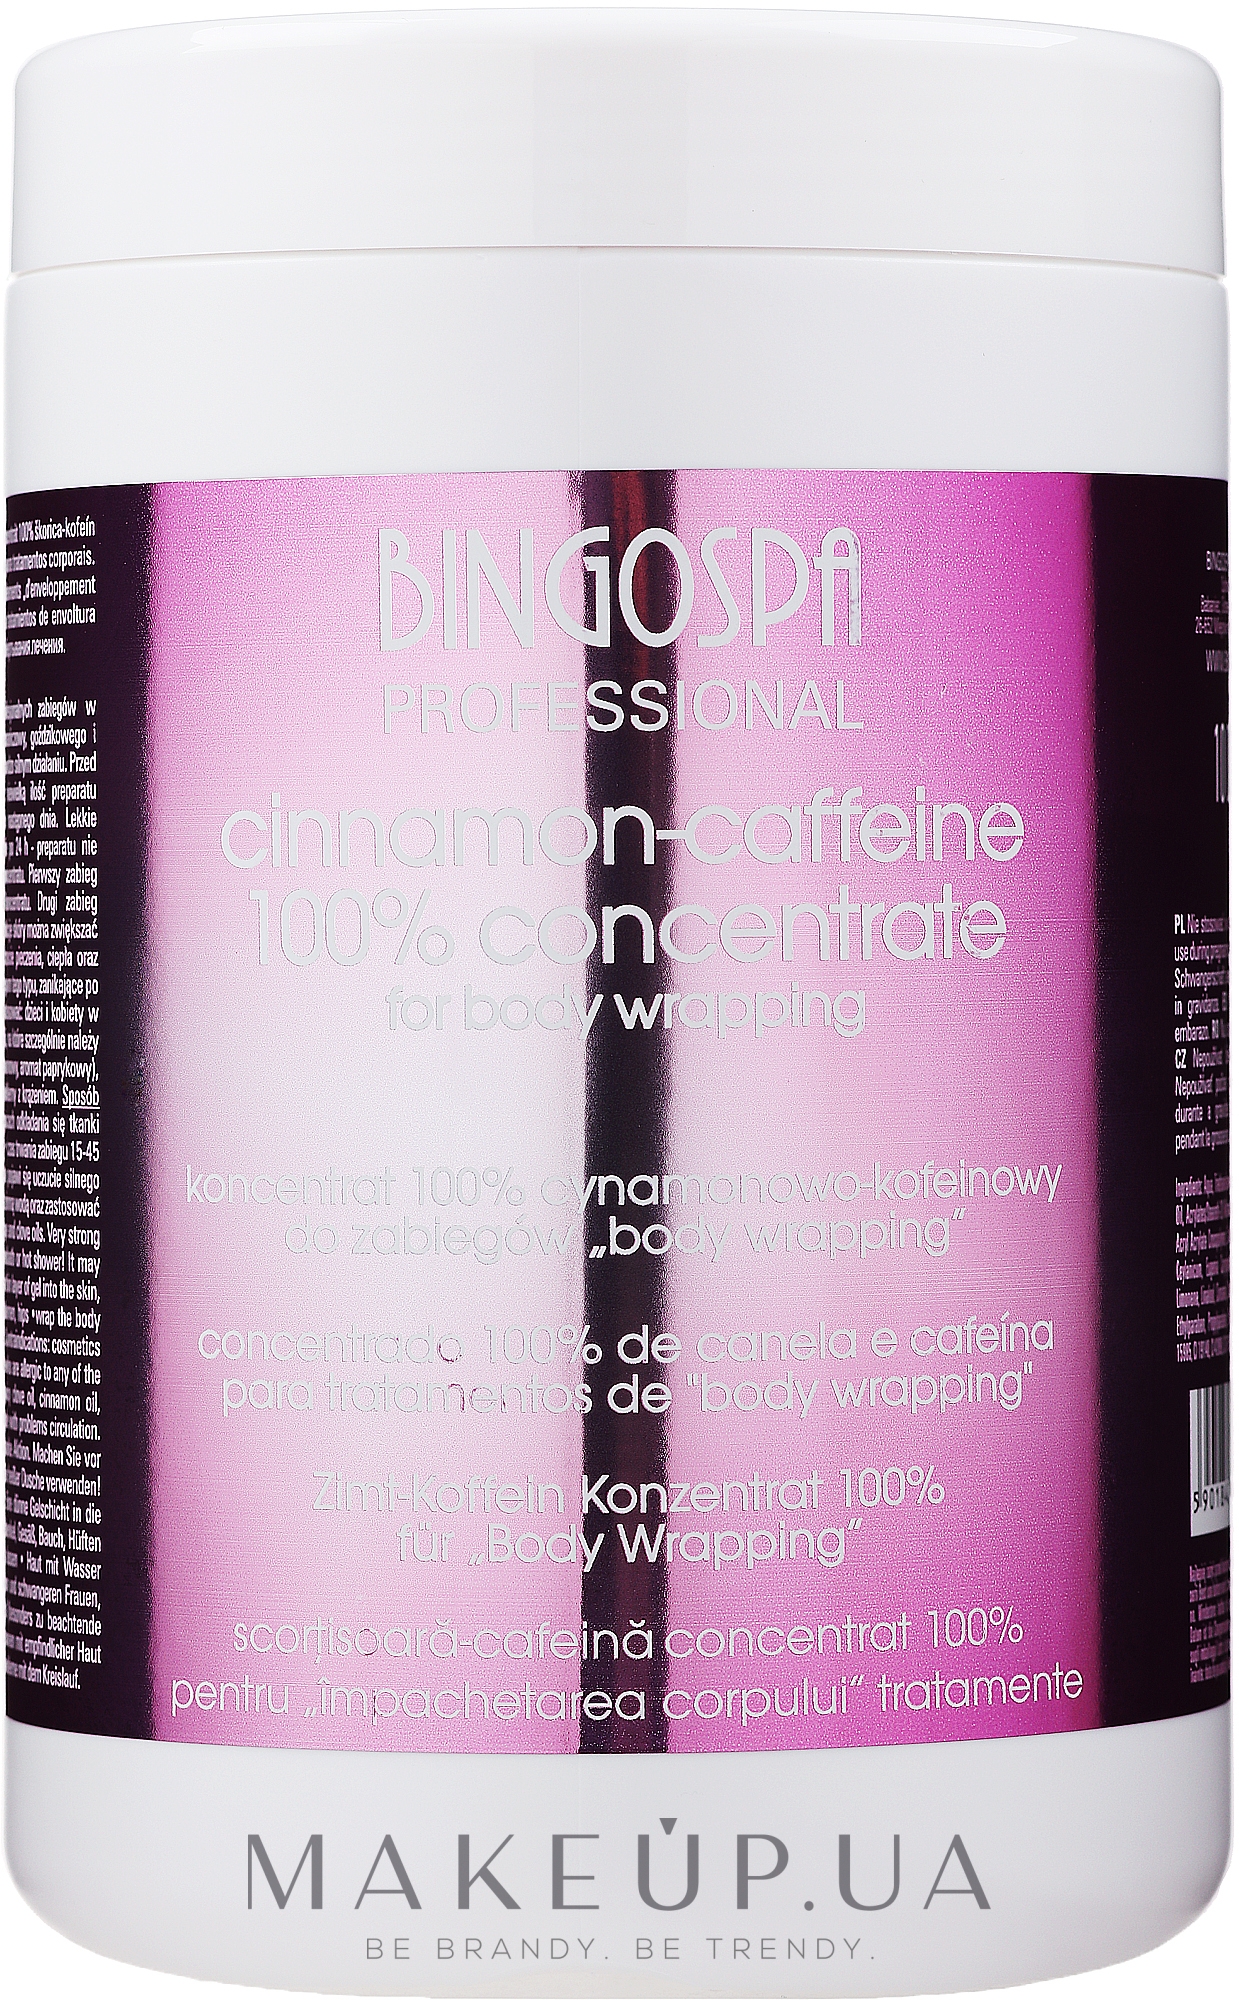 Концентрат 100% кофеина и корицы - BingoSpa Cinnamon-Caffeine 100% Concentrate — фото 1000g